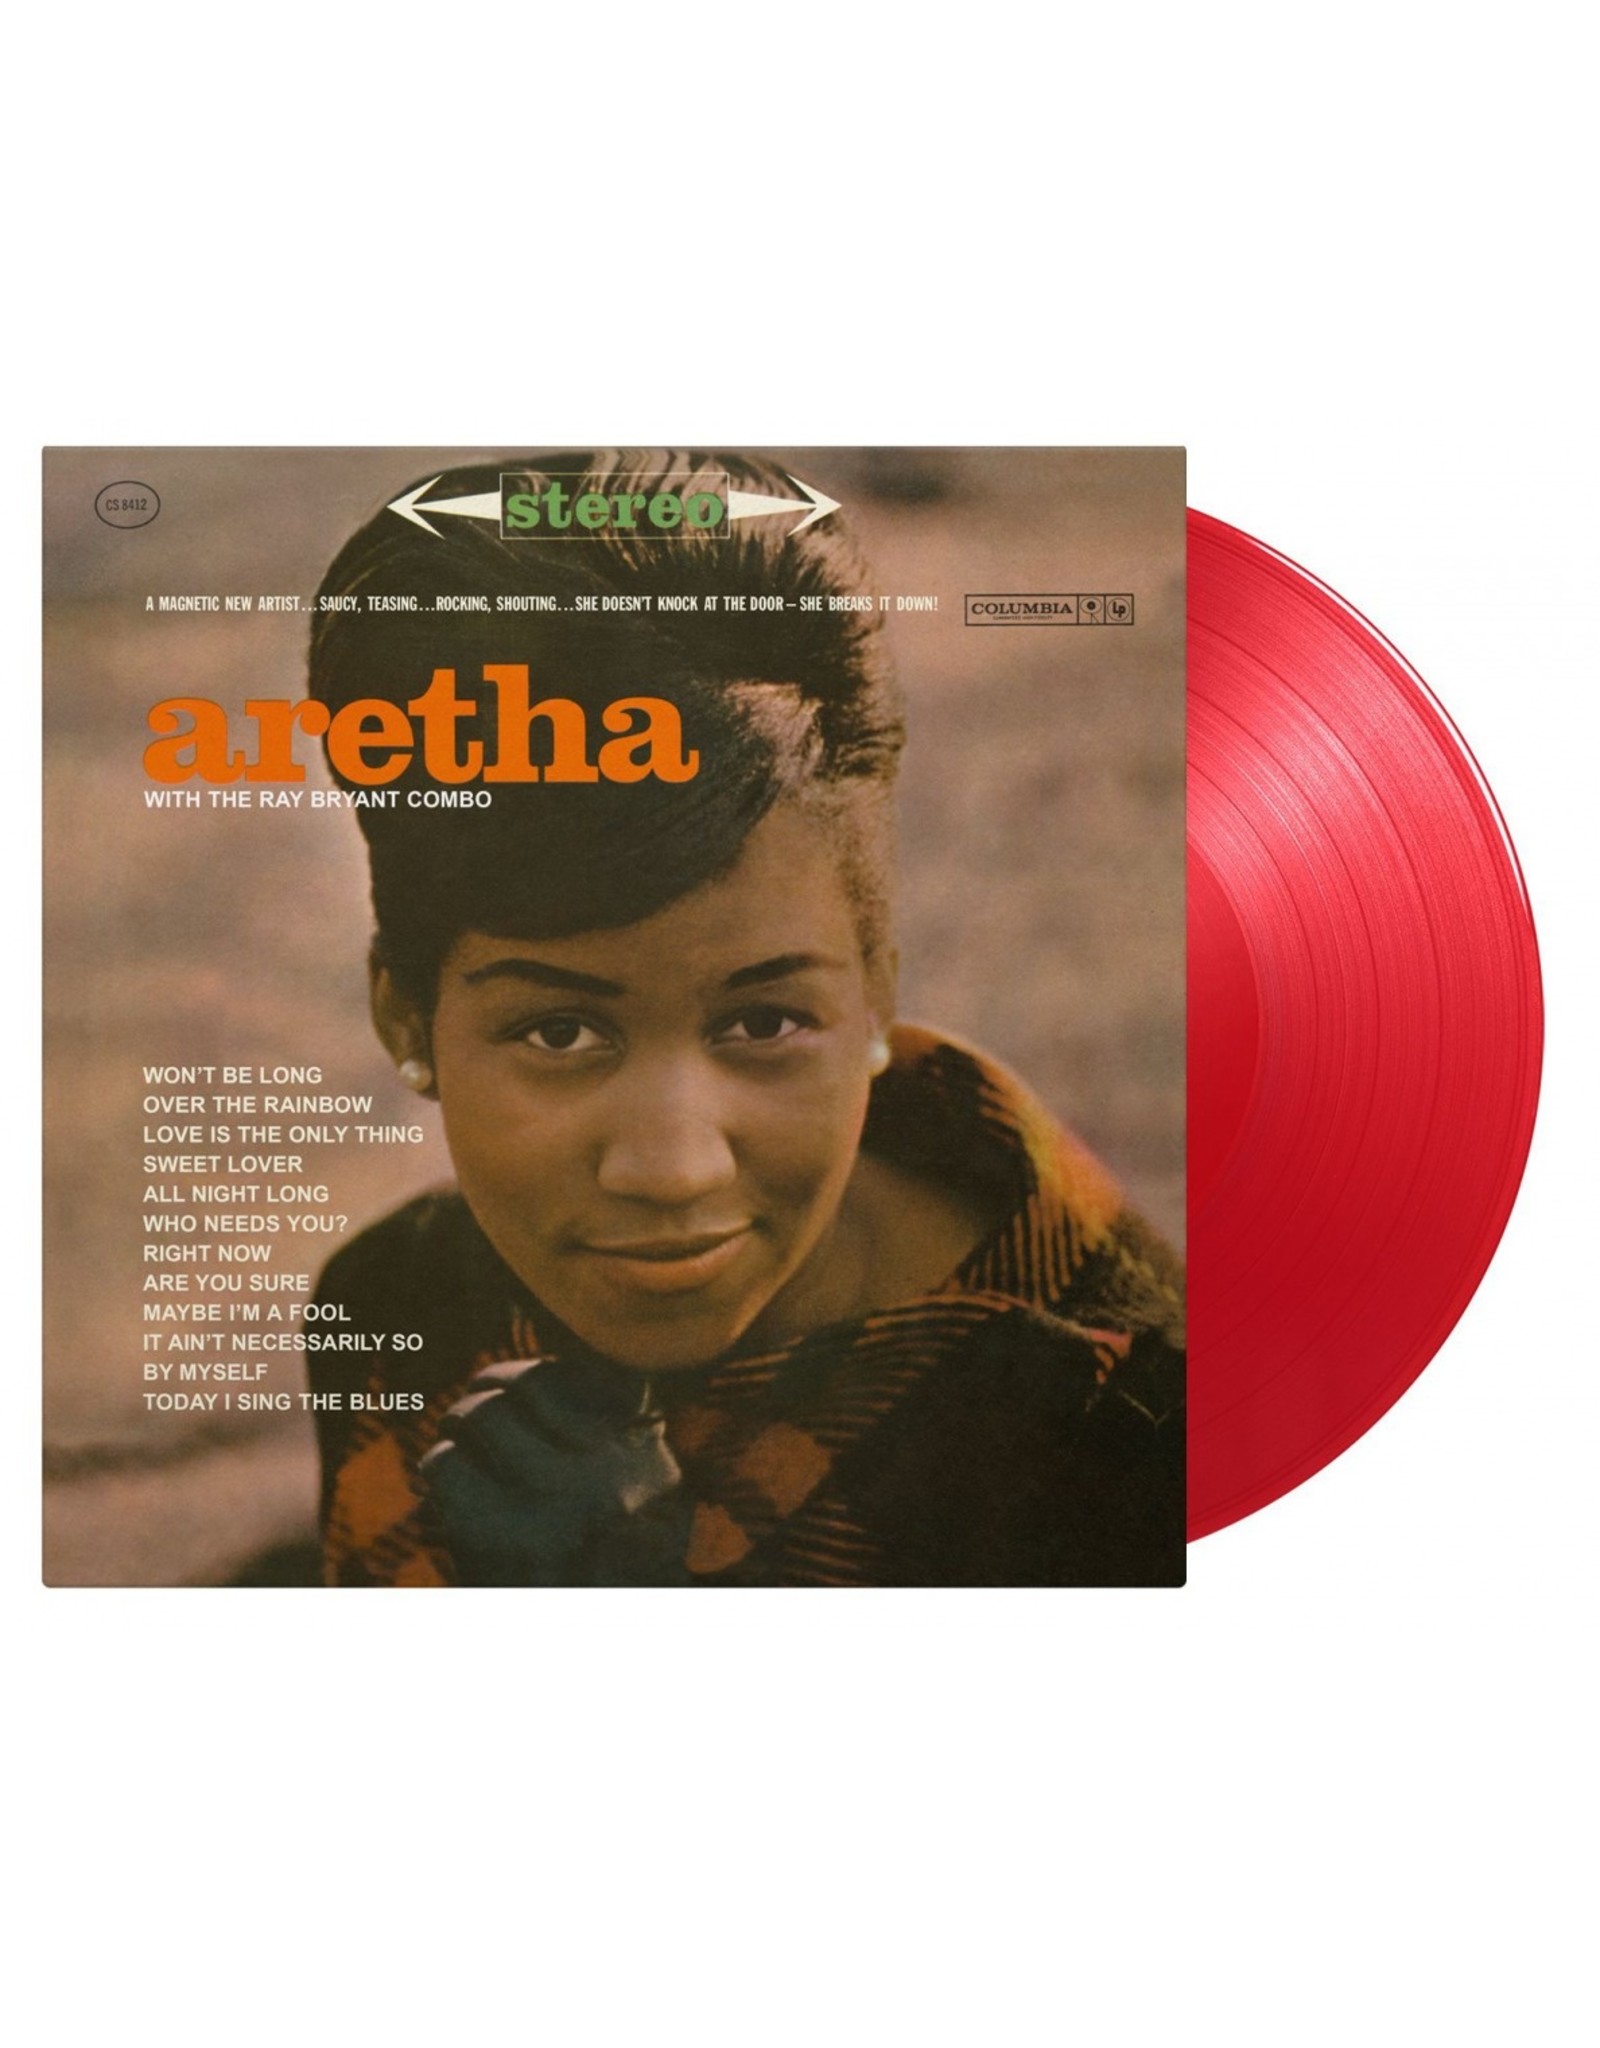 Aretha Franklin - Aretha (Music On Vinyl) [Red Vinyl]